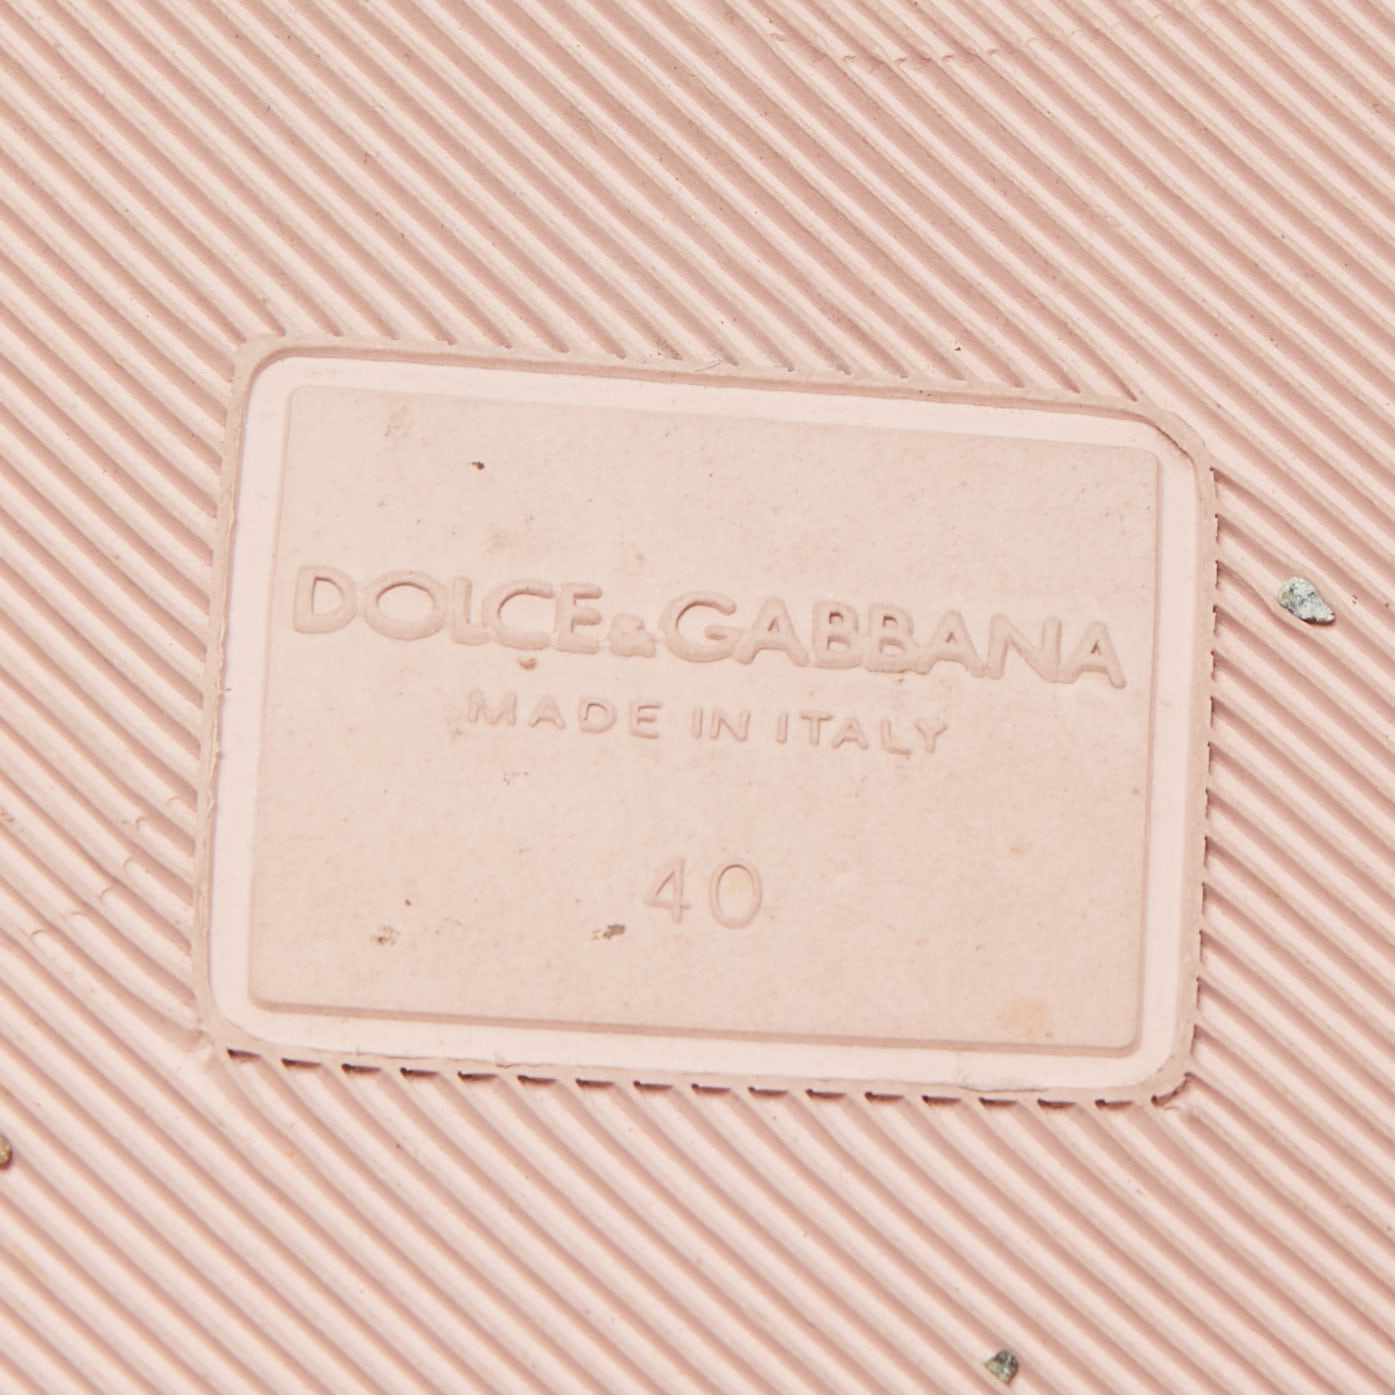 Dolce & Gabbana Pink Jacquard Fabric Embellished Slides Size 40